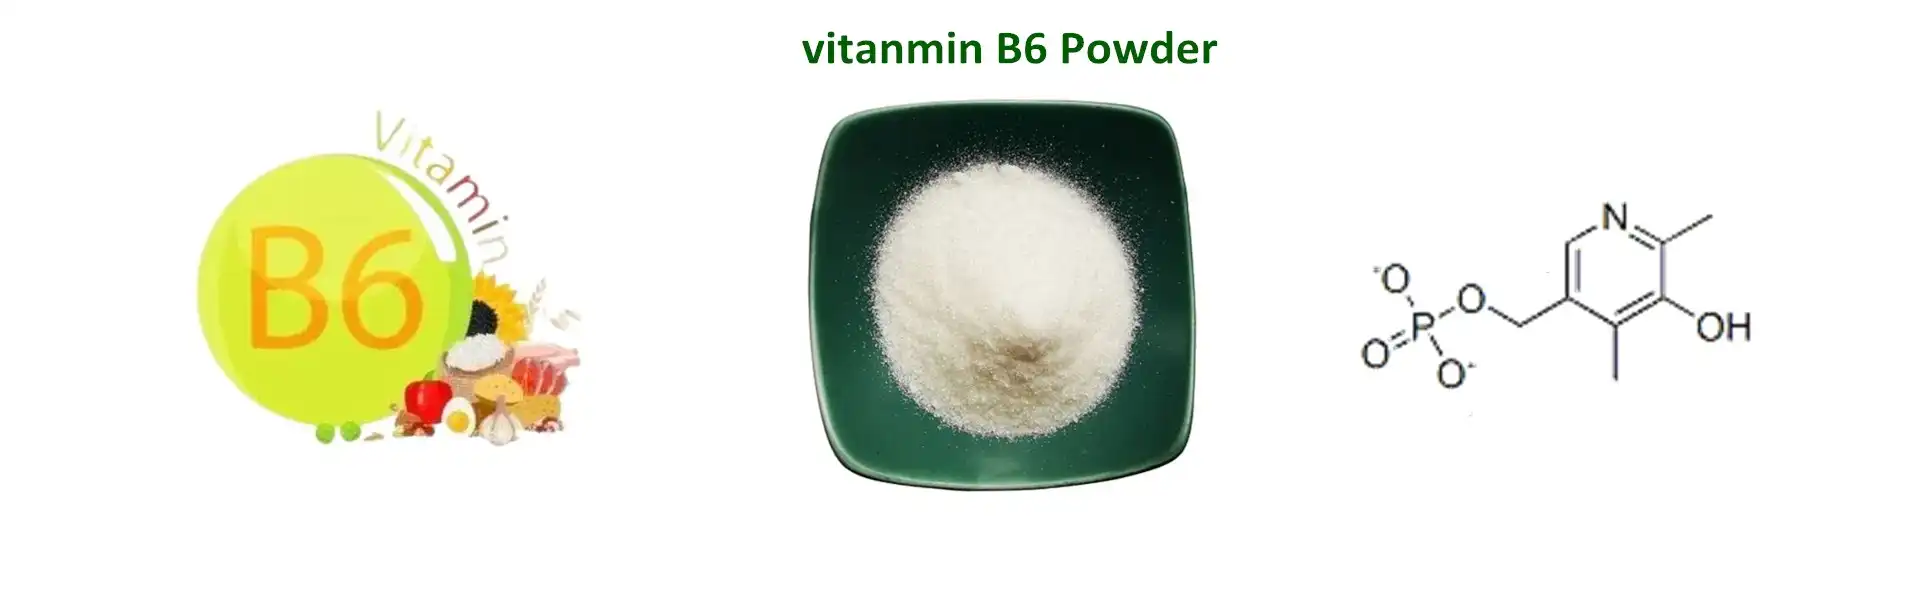 vitamin b6 powder